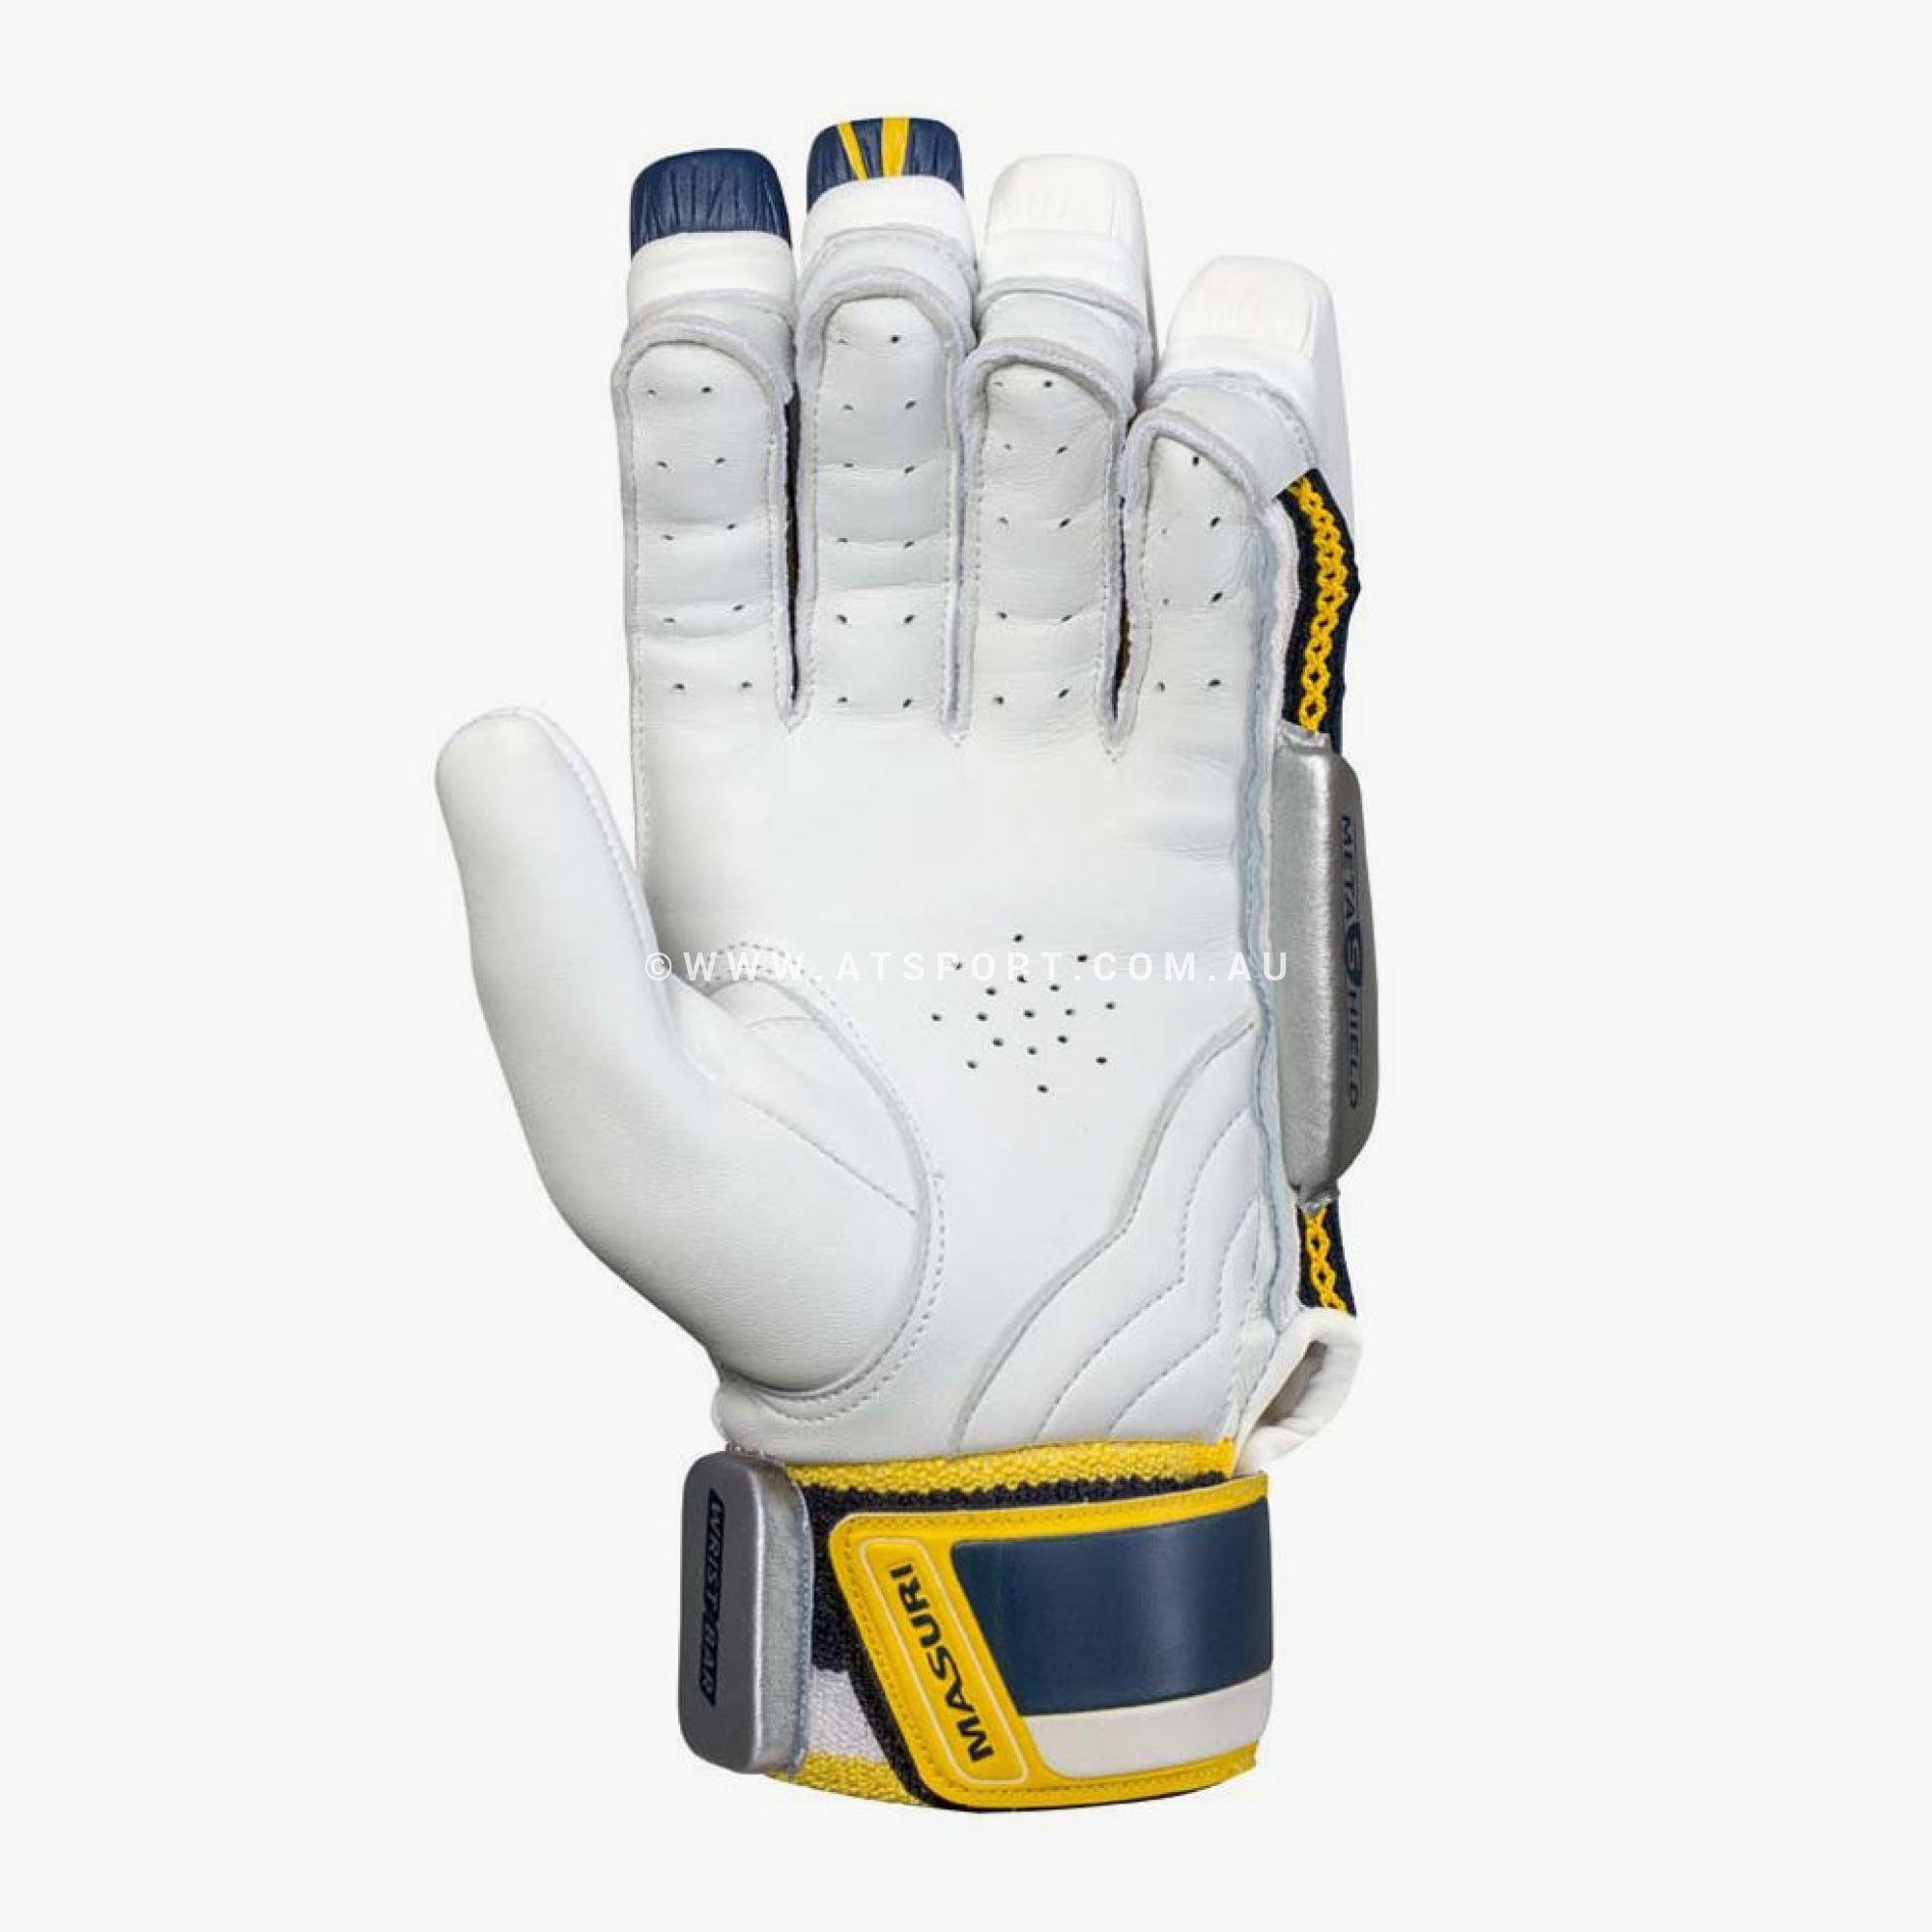 Masuri E LINE Cricket Batting Gloves - ADULT - AT Sports